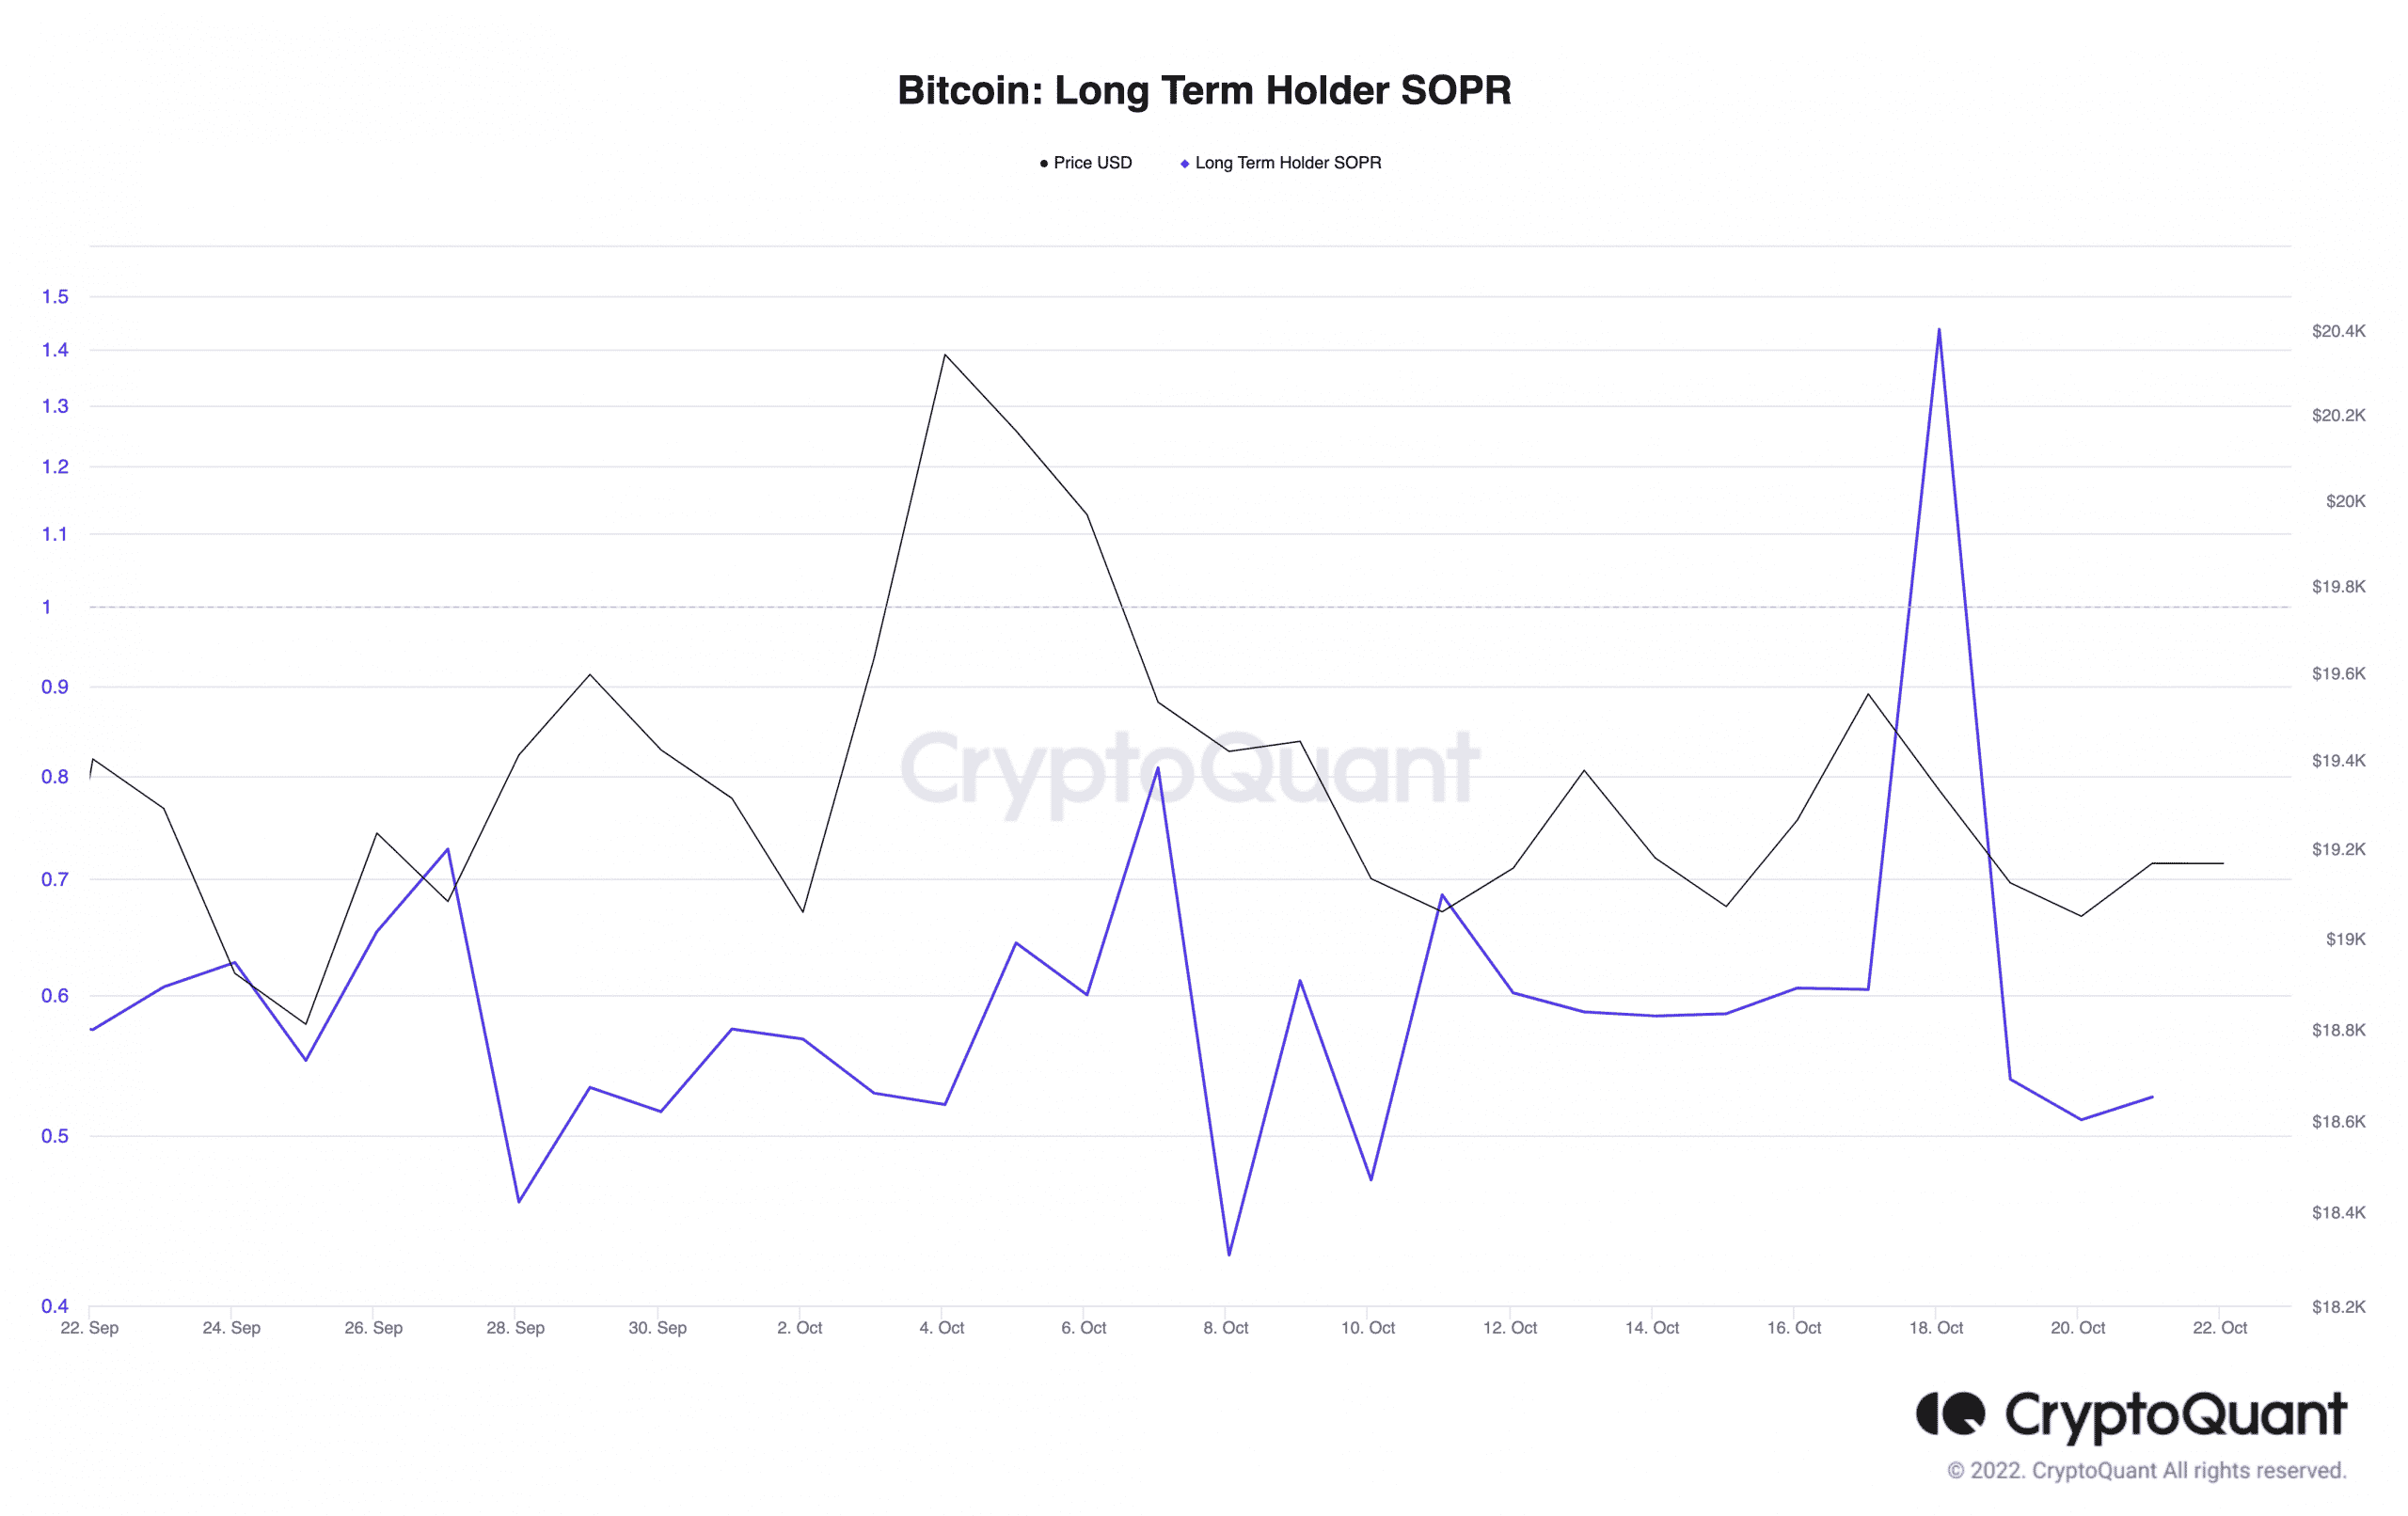 Bitcoin long-term investor profit activity